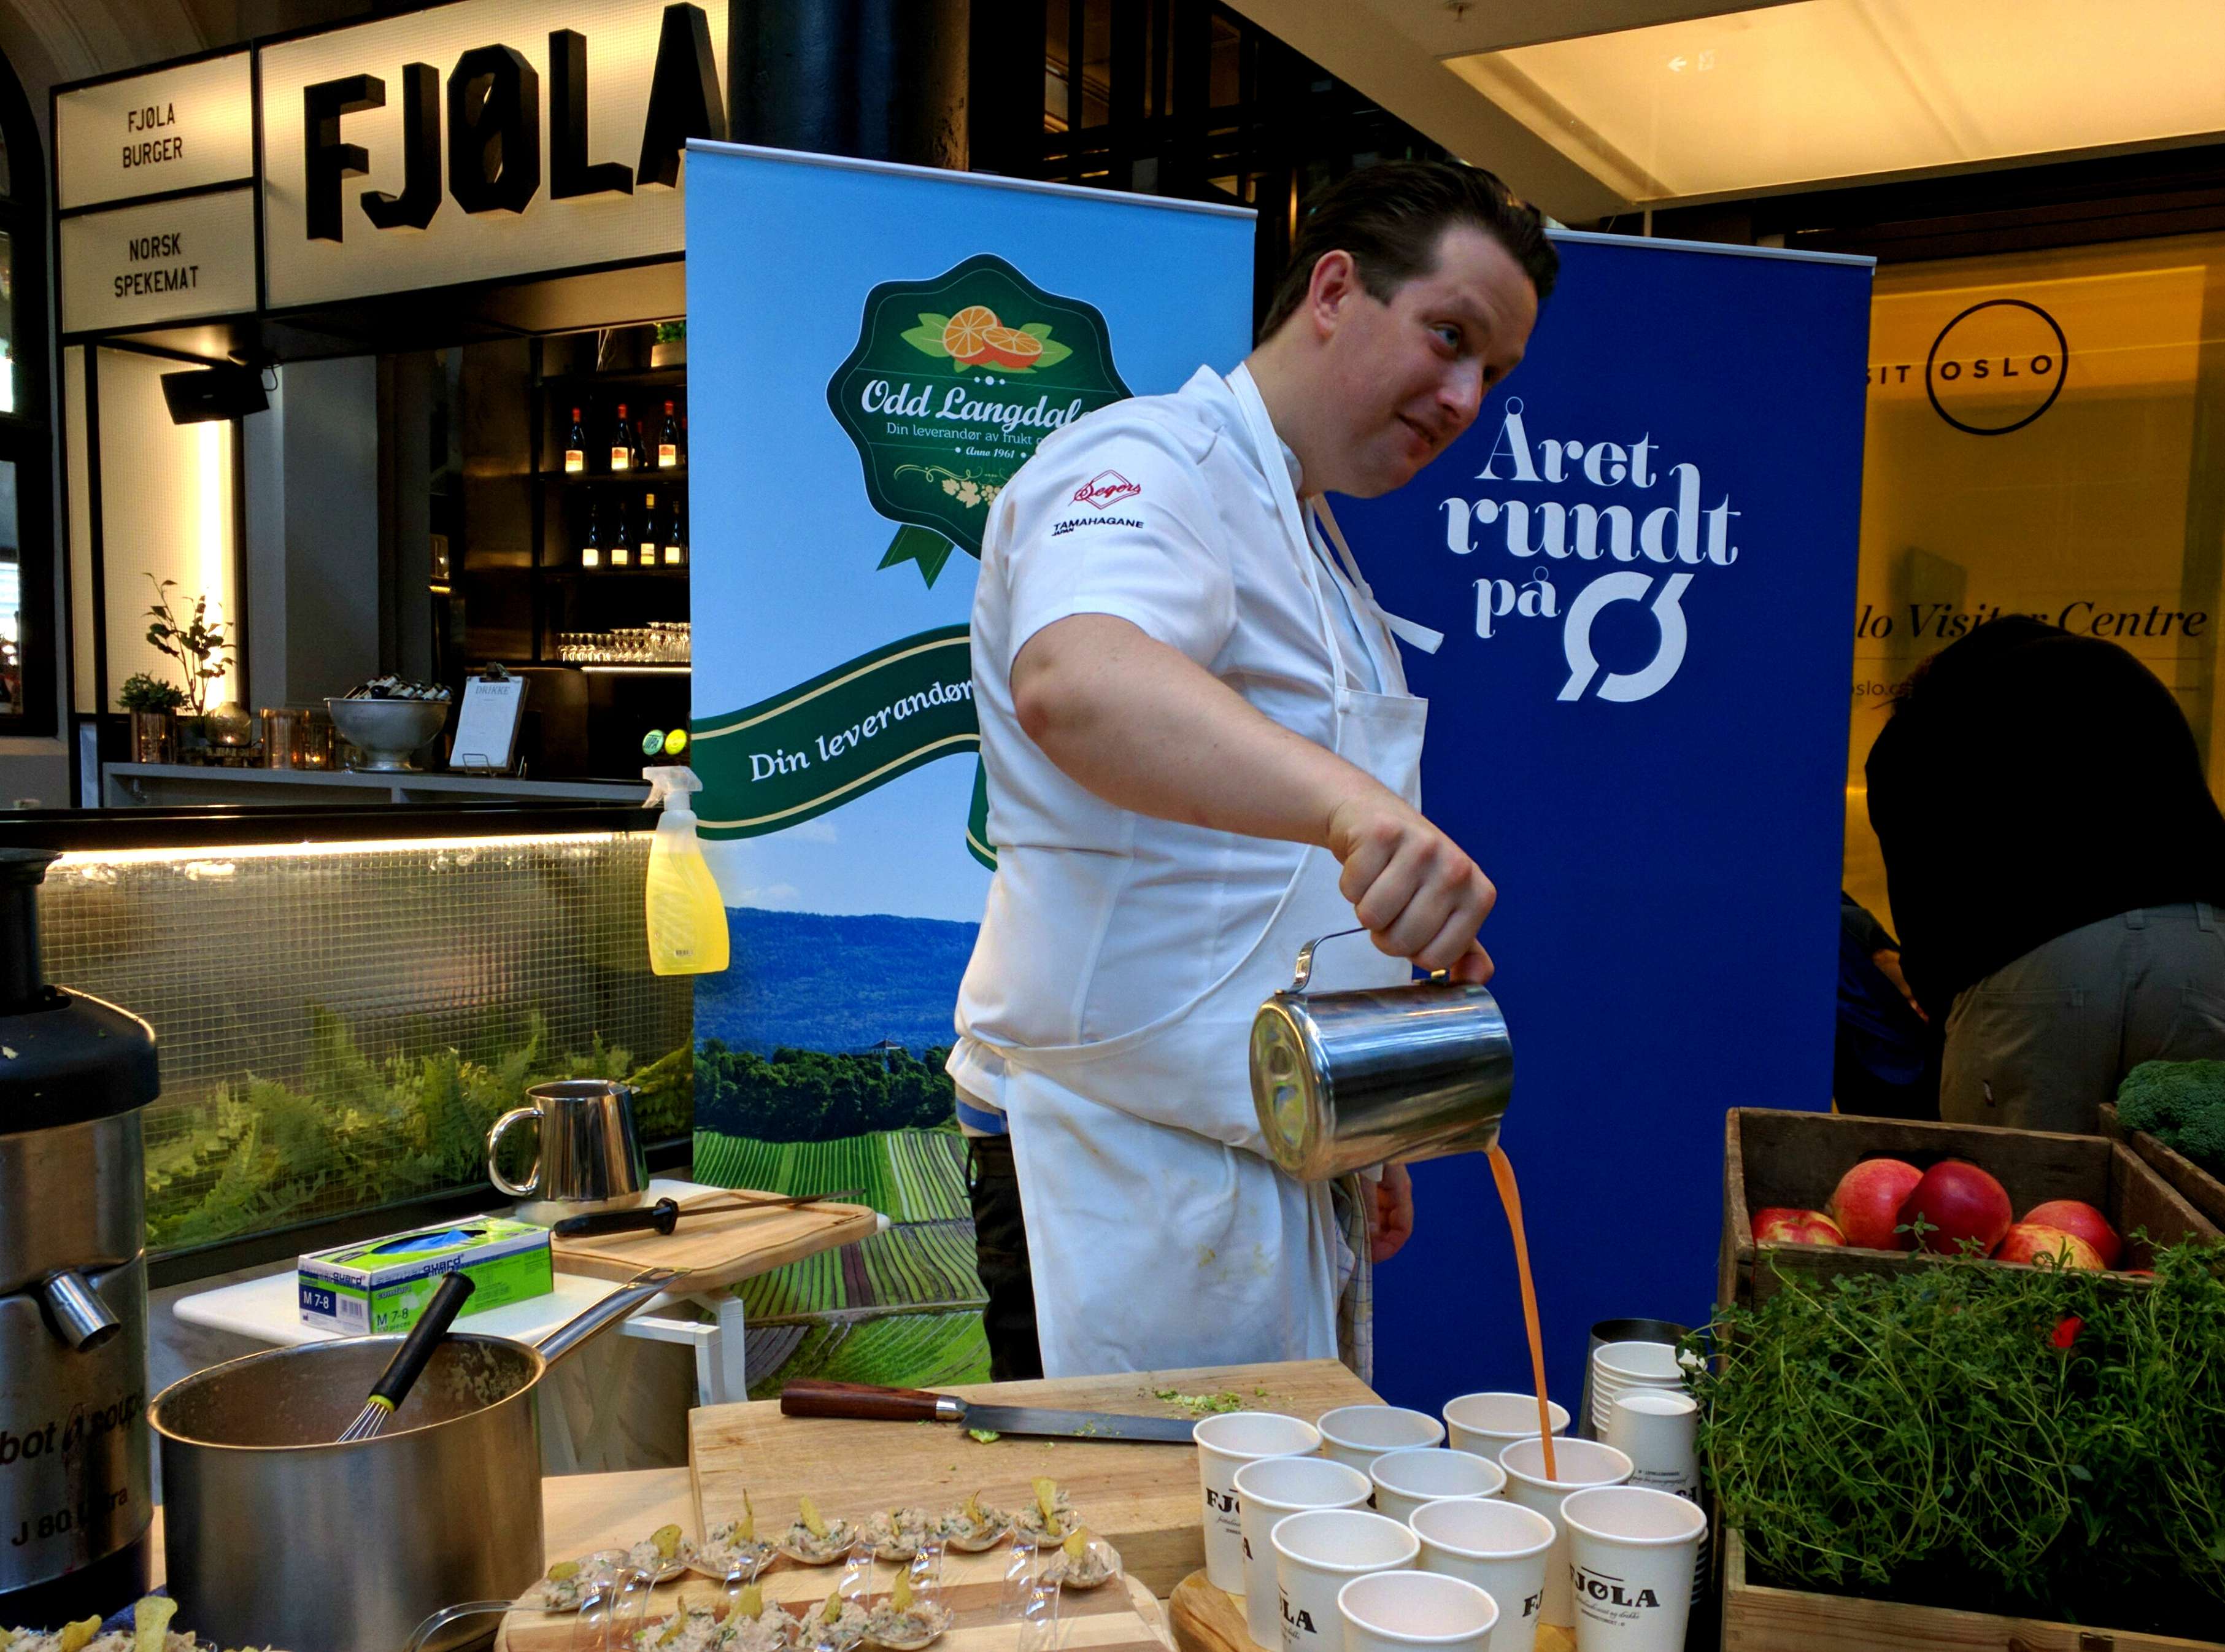 Fjøla Restaurant serves up samples of Norwegian classics